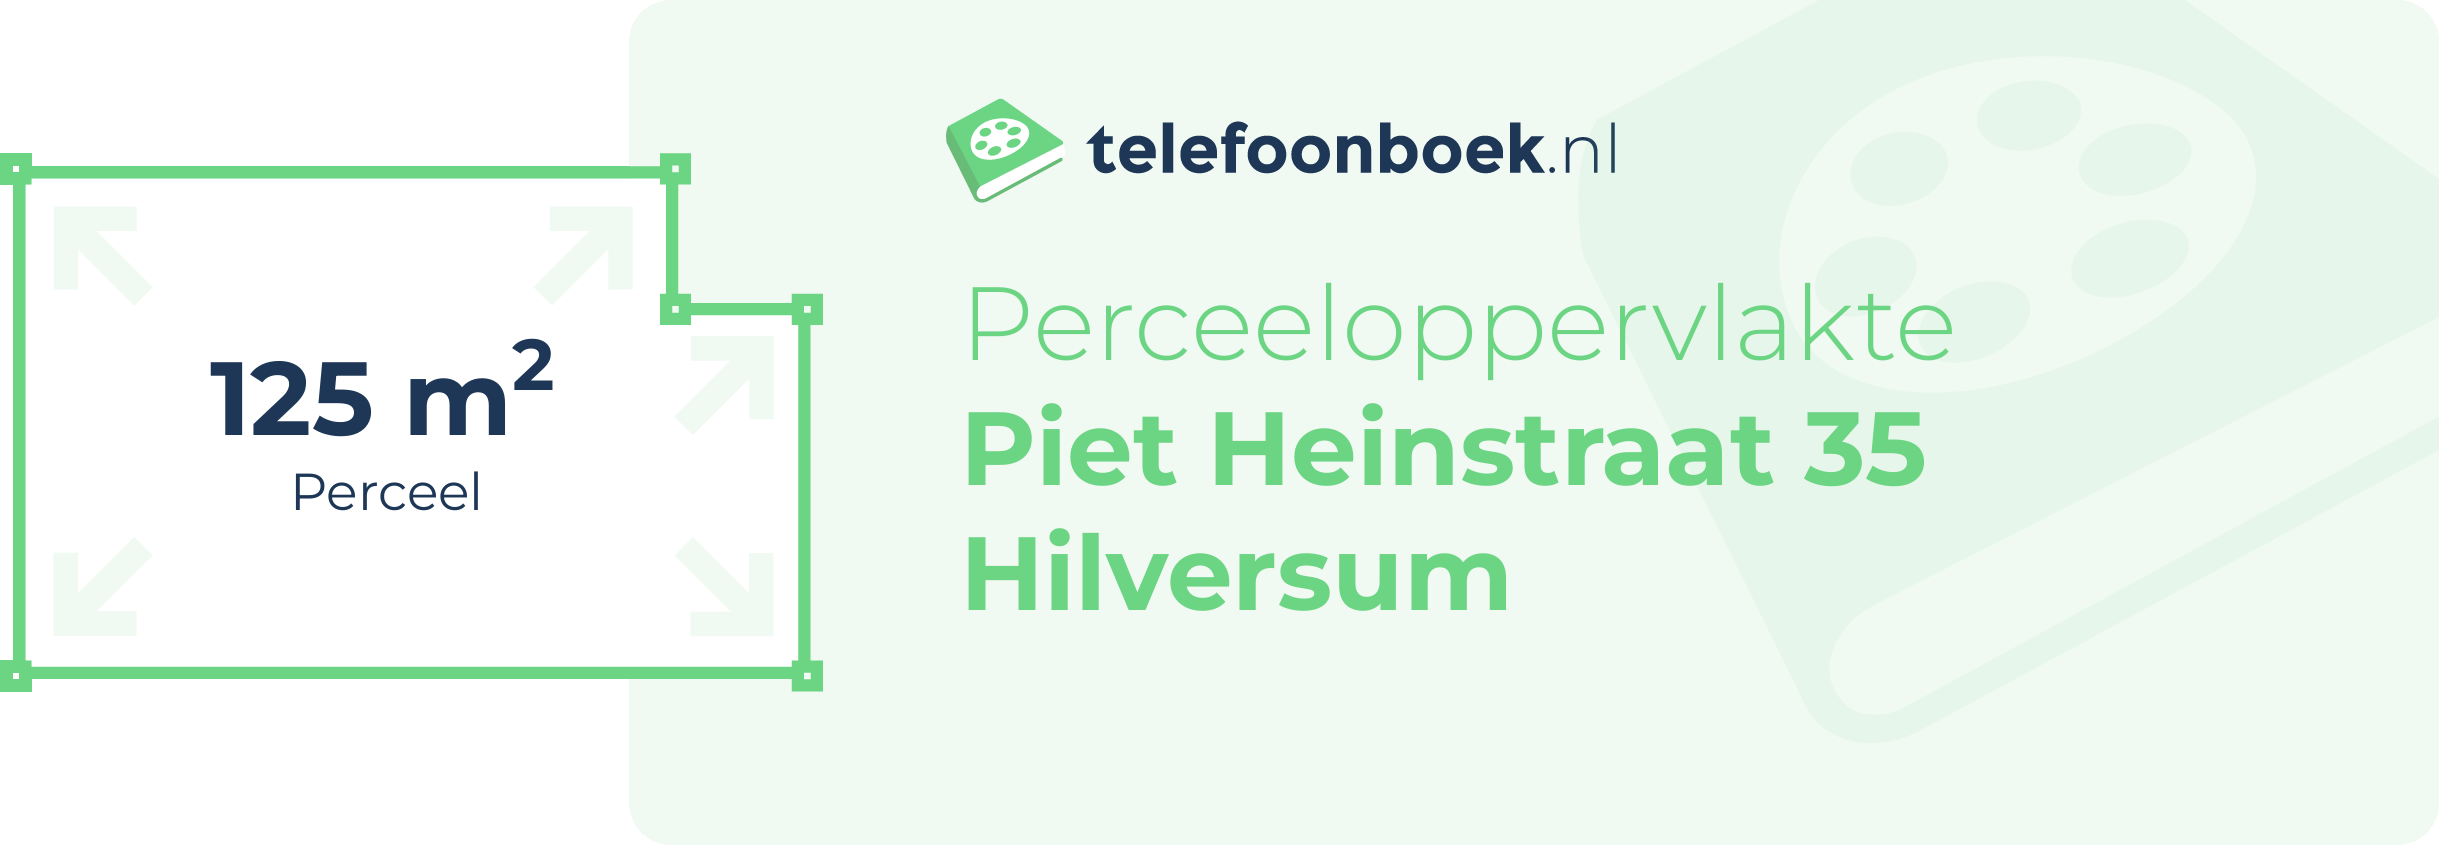 Perceeloppervlakte Piet Heinstraat 35 Hilversum